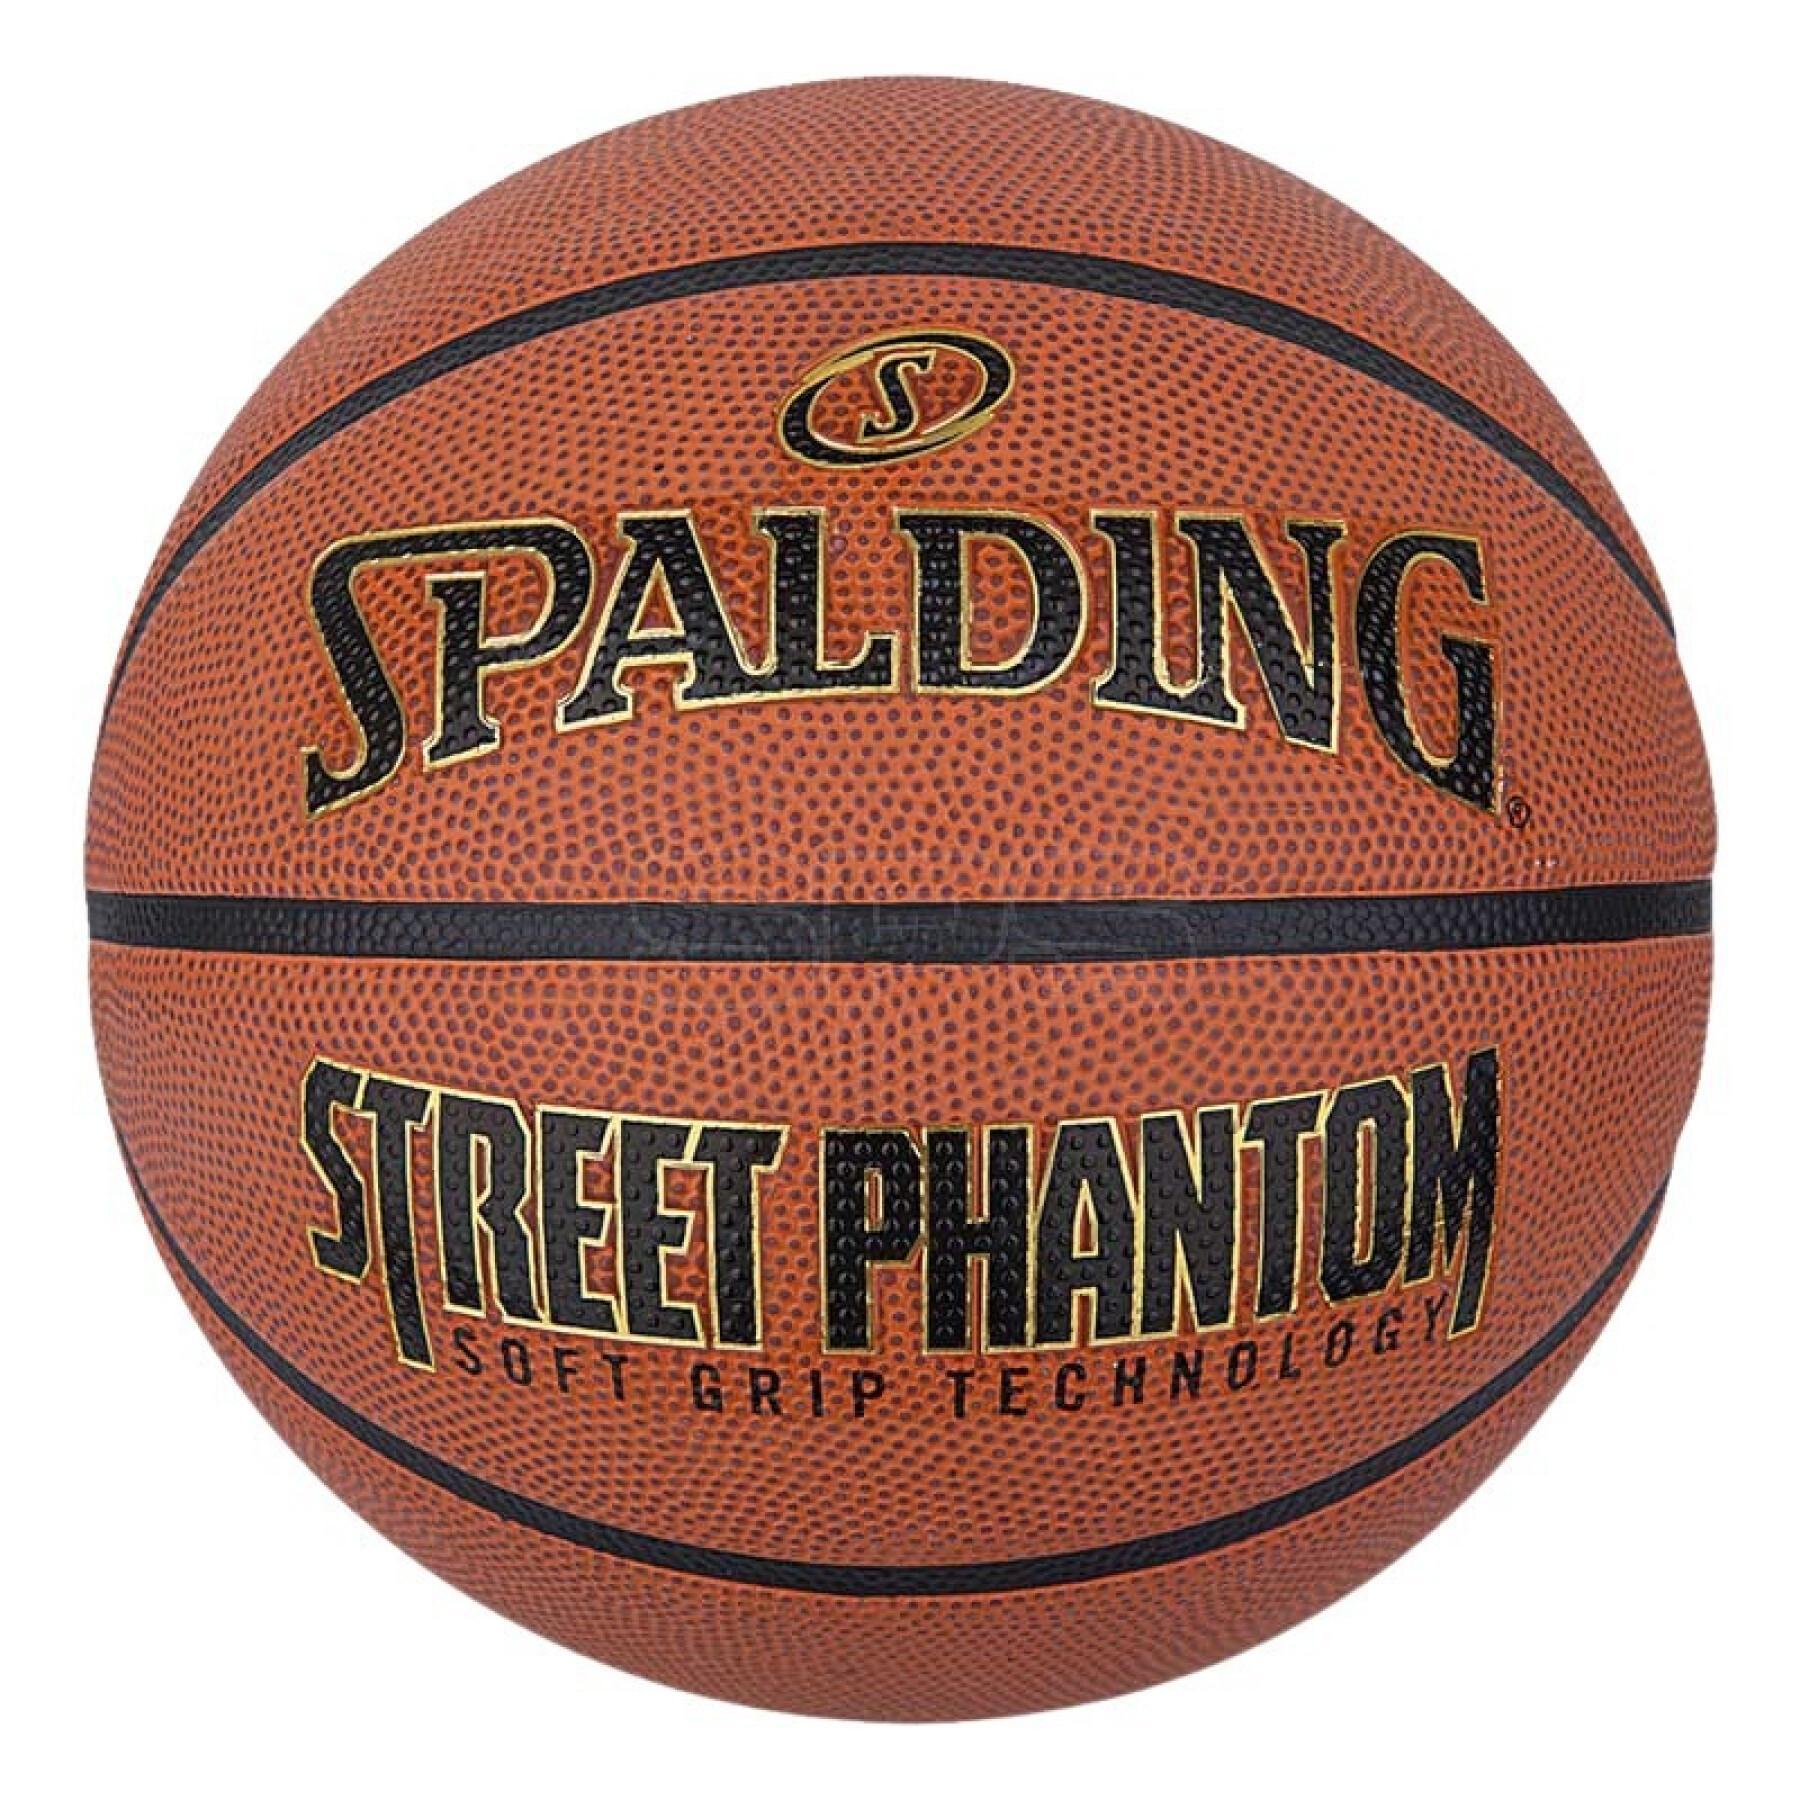 Balon Spalding Street Phantom Rubber